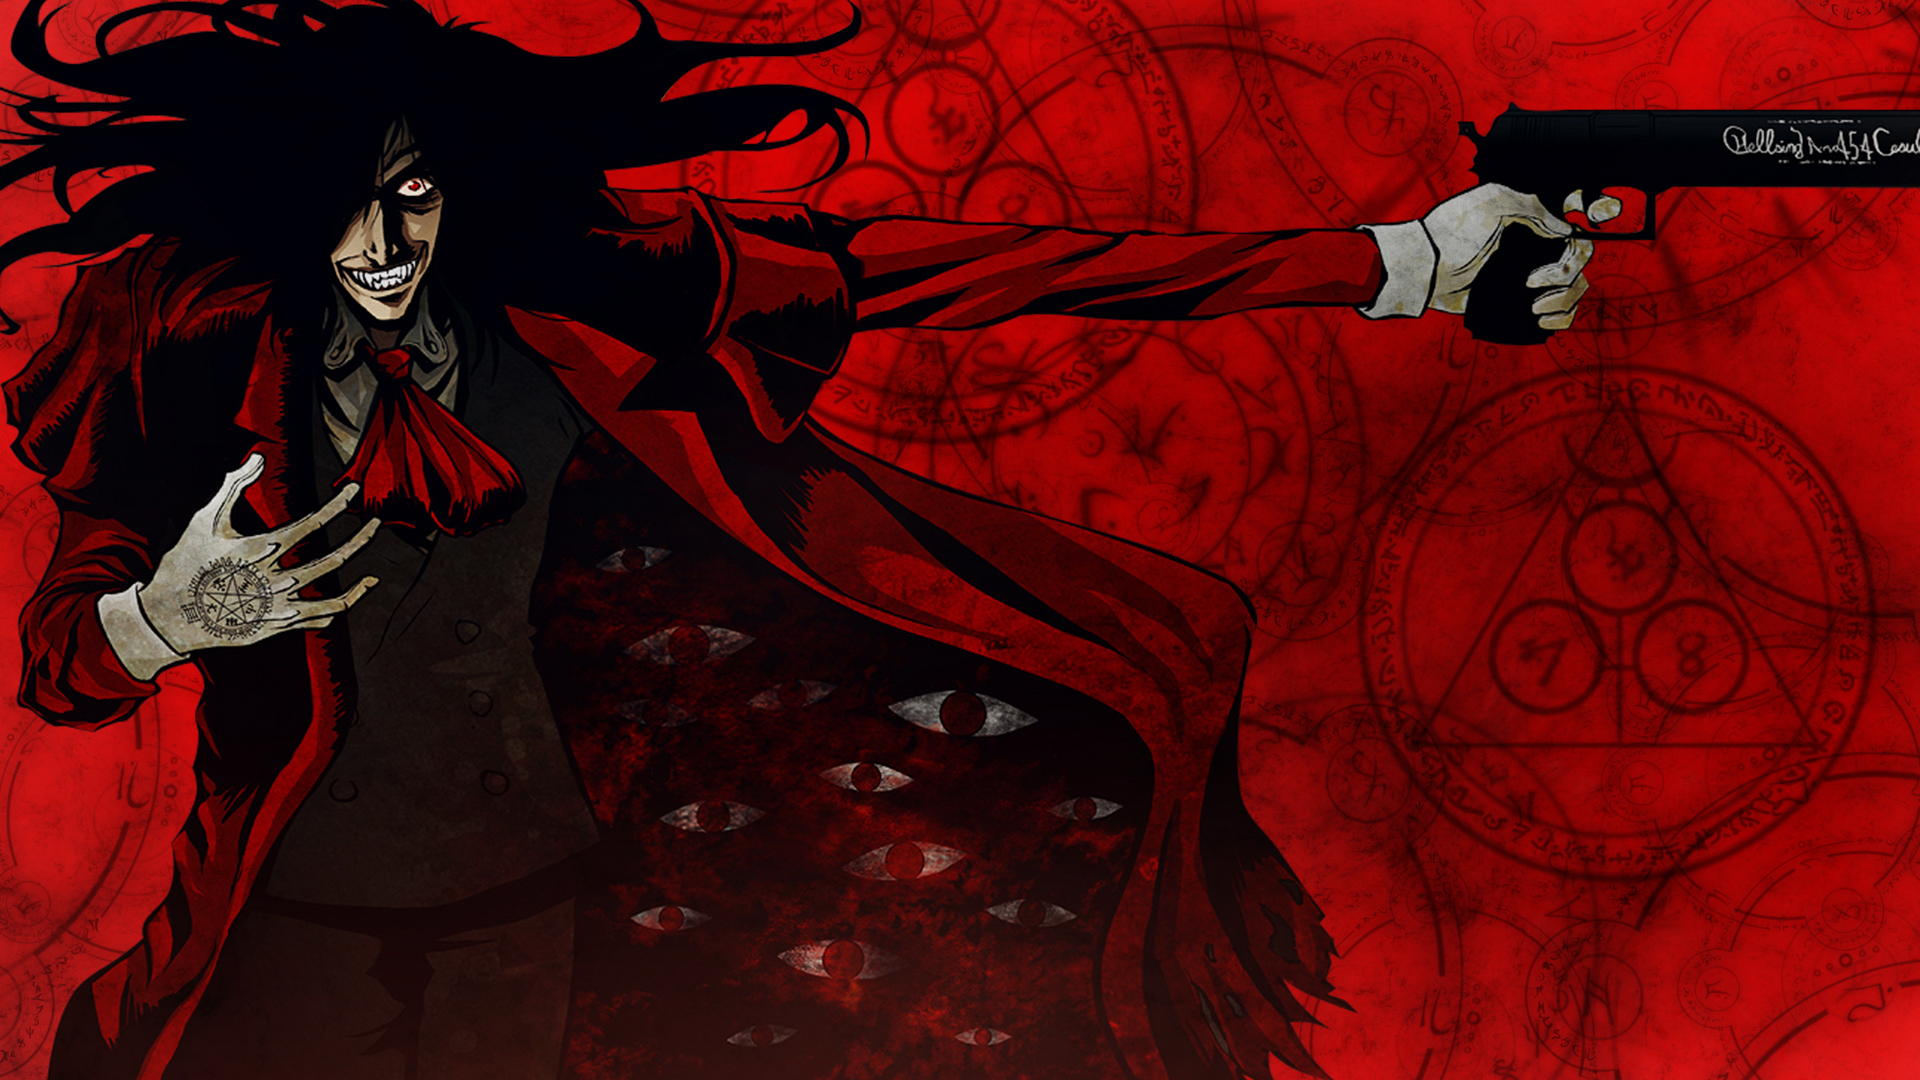 alucard wallpaper hd,red,cg artwork,fictional character,illustration,demon